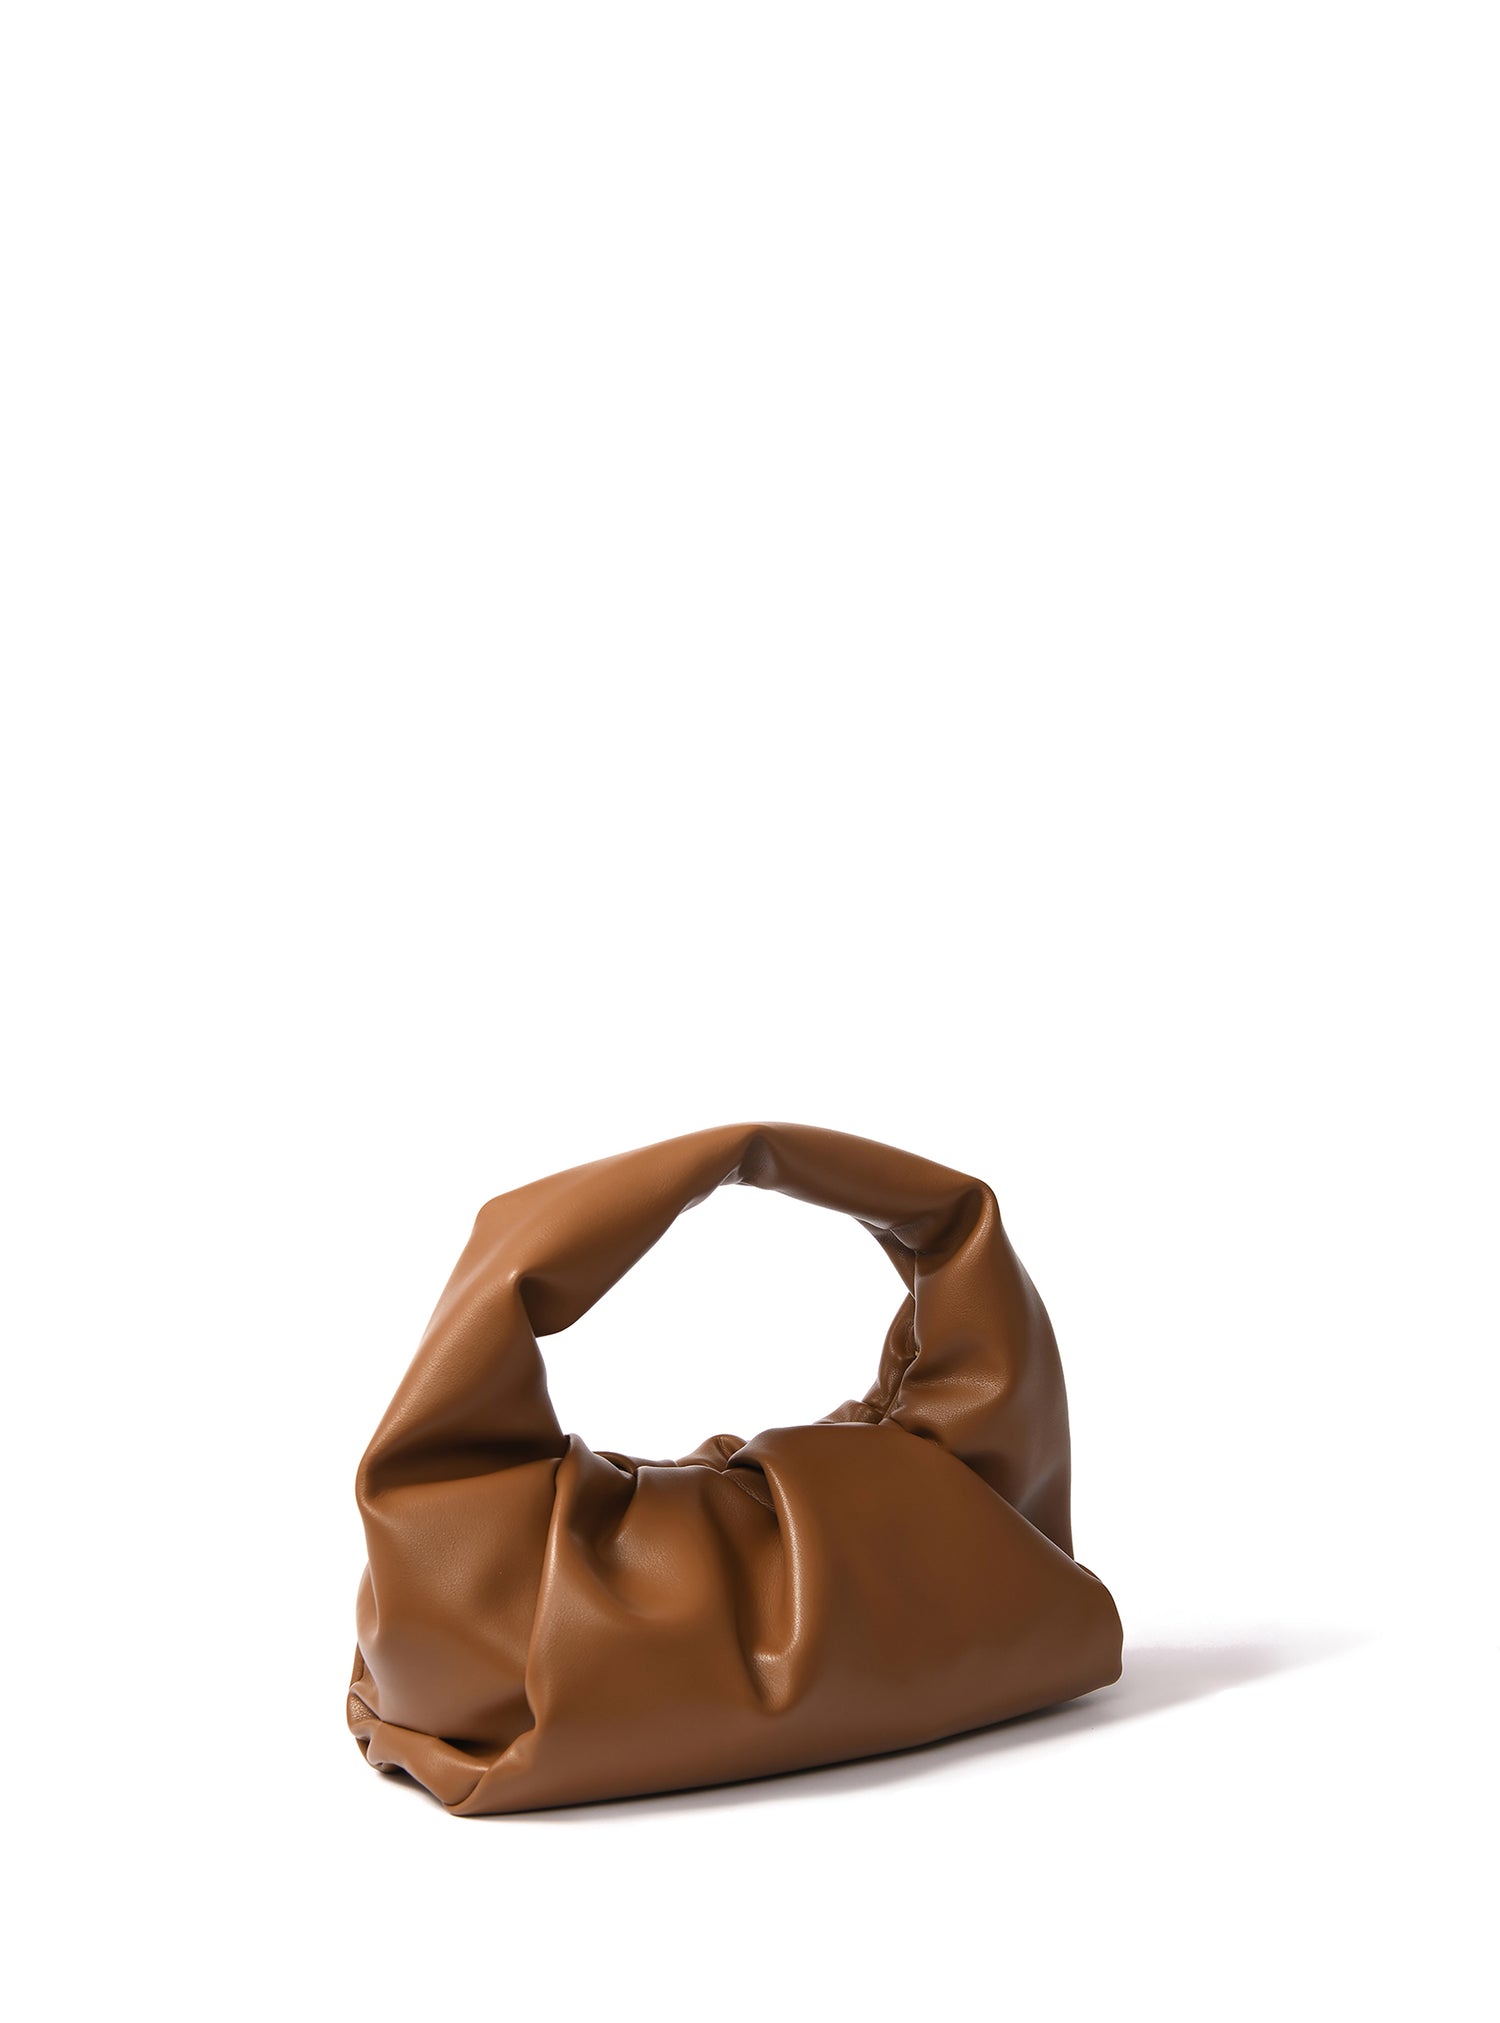 Marshmallow Croissant Bag in Soft Leather, Caramel – Bob Oré